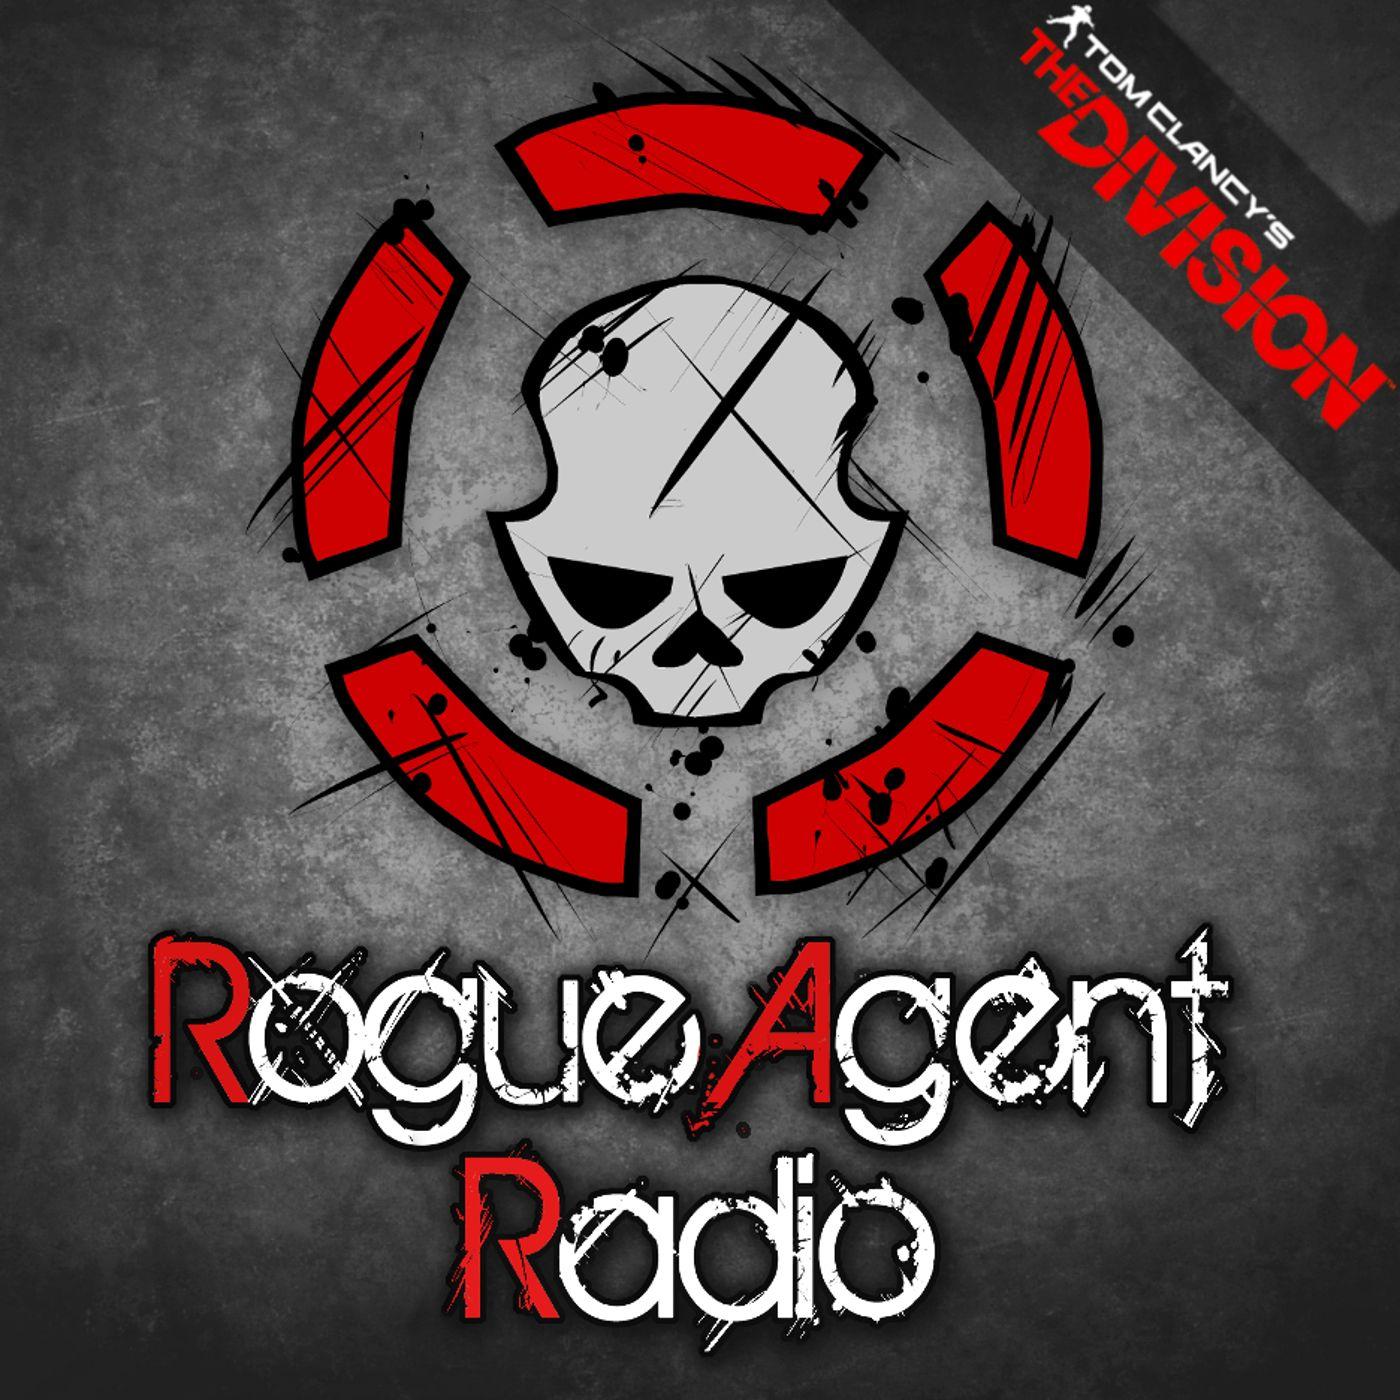 The Division Rogue Logo - pod. fanatic. Podcast: Rogue Agent Radio Division Podcast